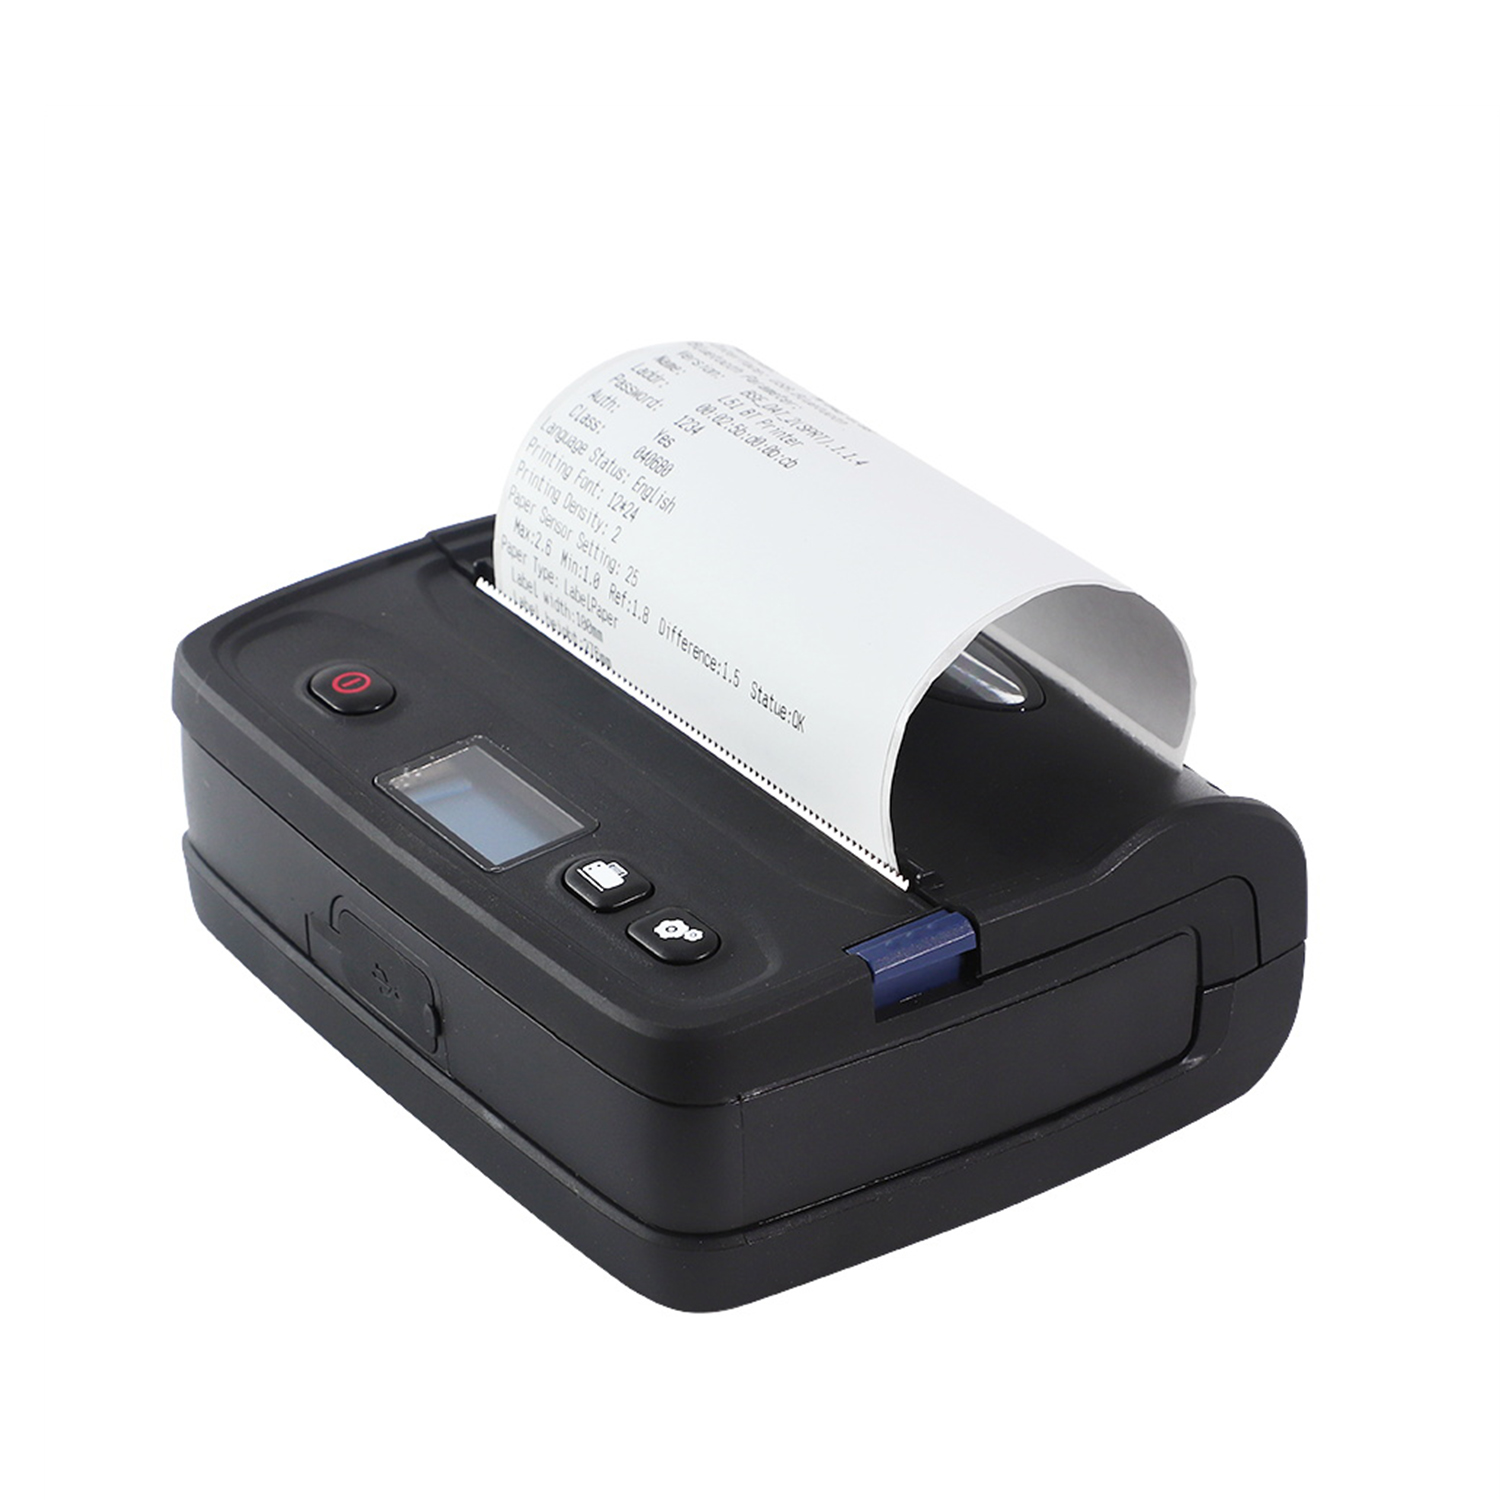 HCC 203dpi ESC/POS 4 Inch Mobile Bluetooth Thermal Label Printer HCC-L51